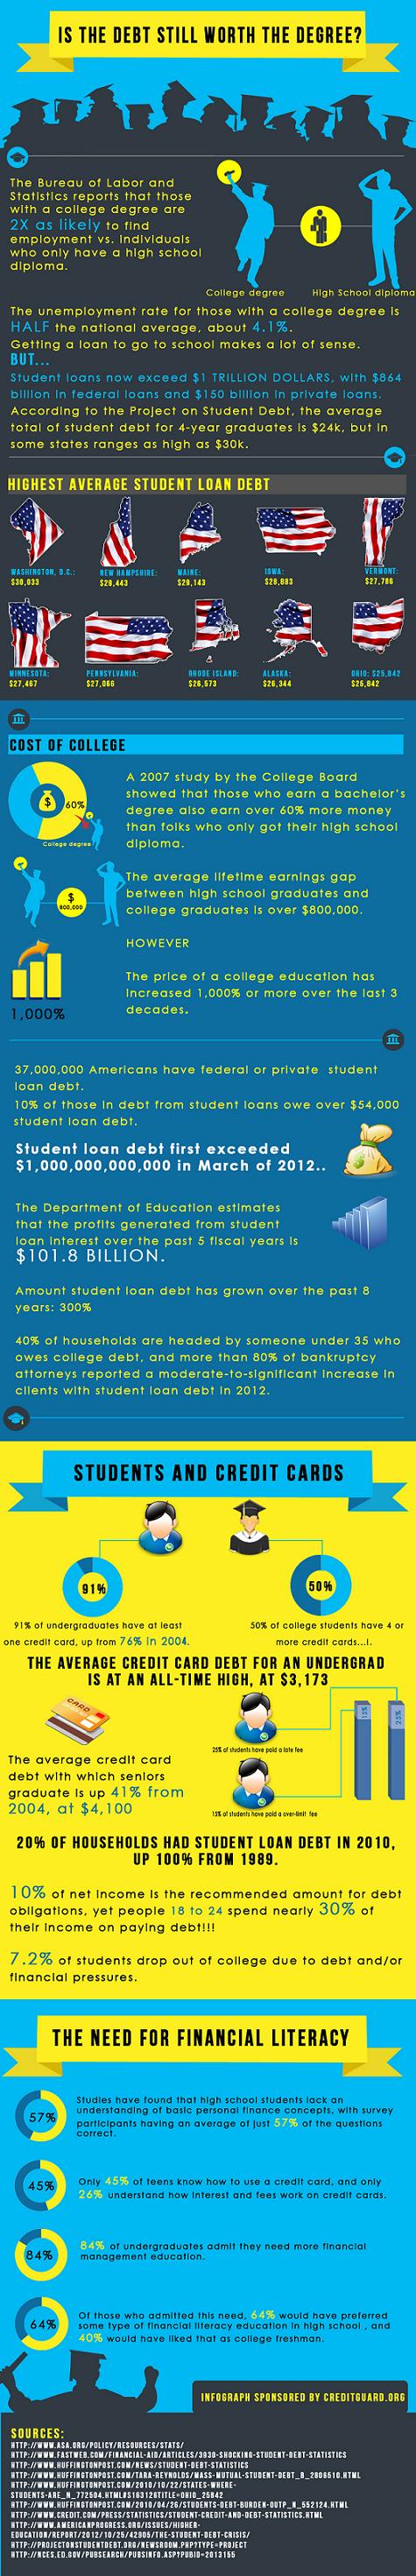 creditguards infographic.KBIC 10 30.org_